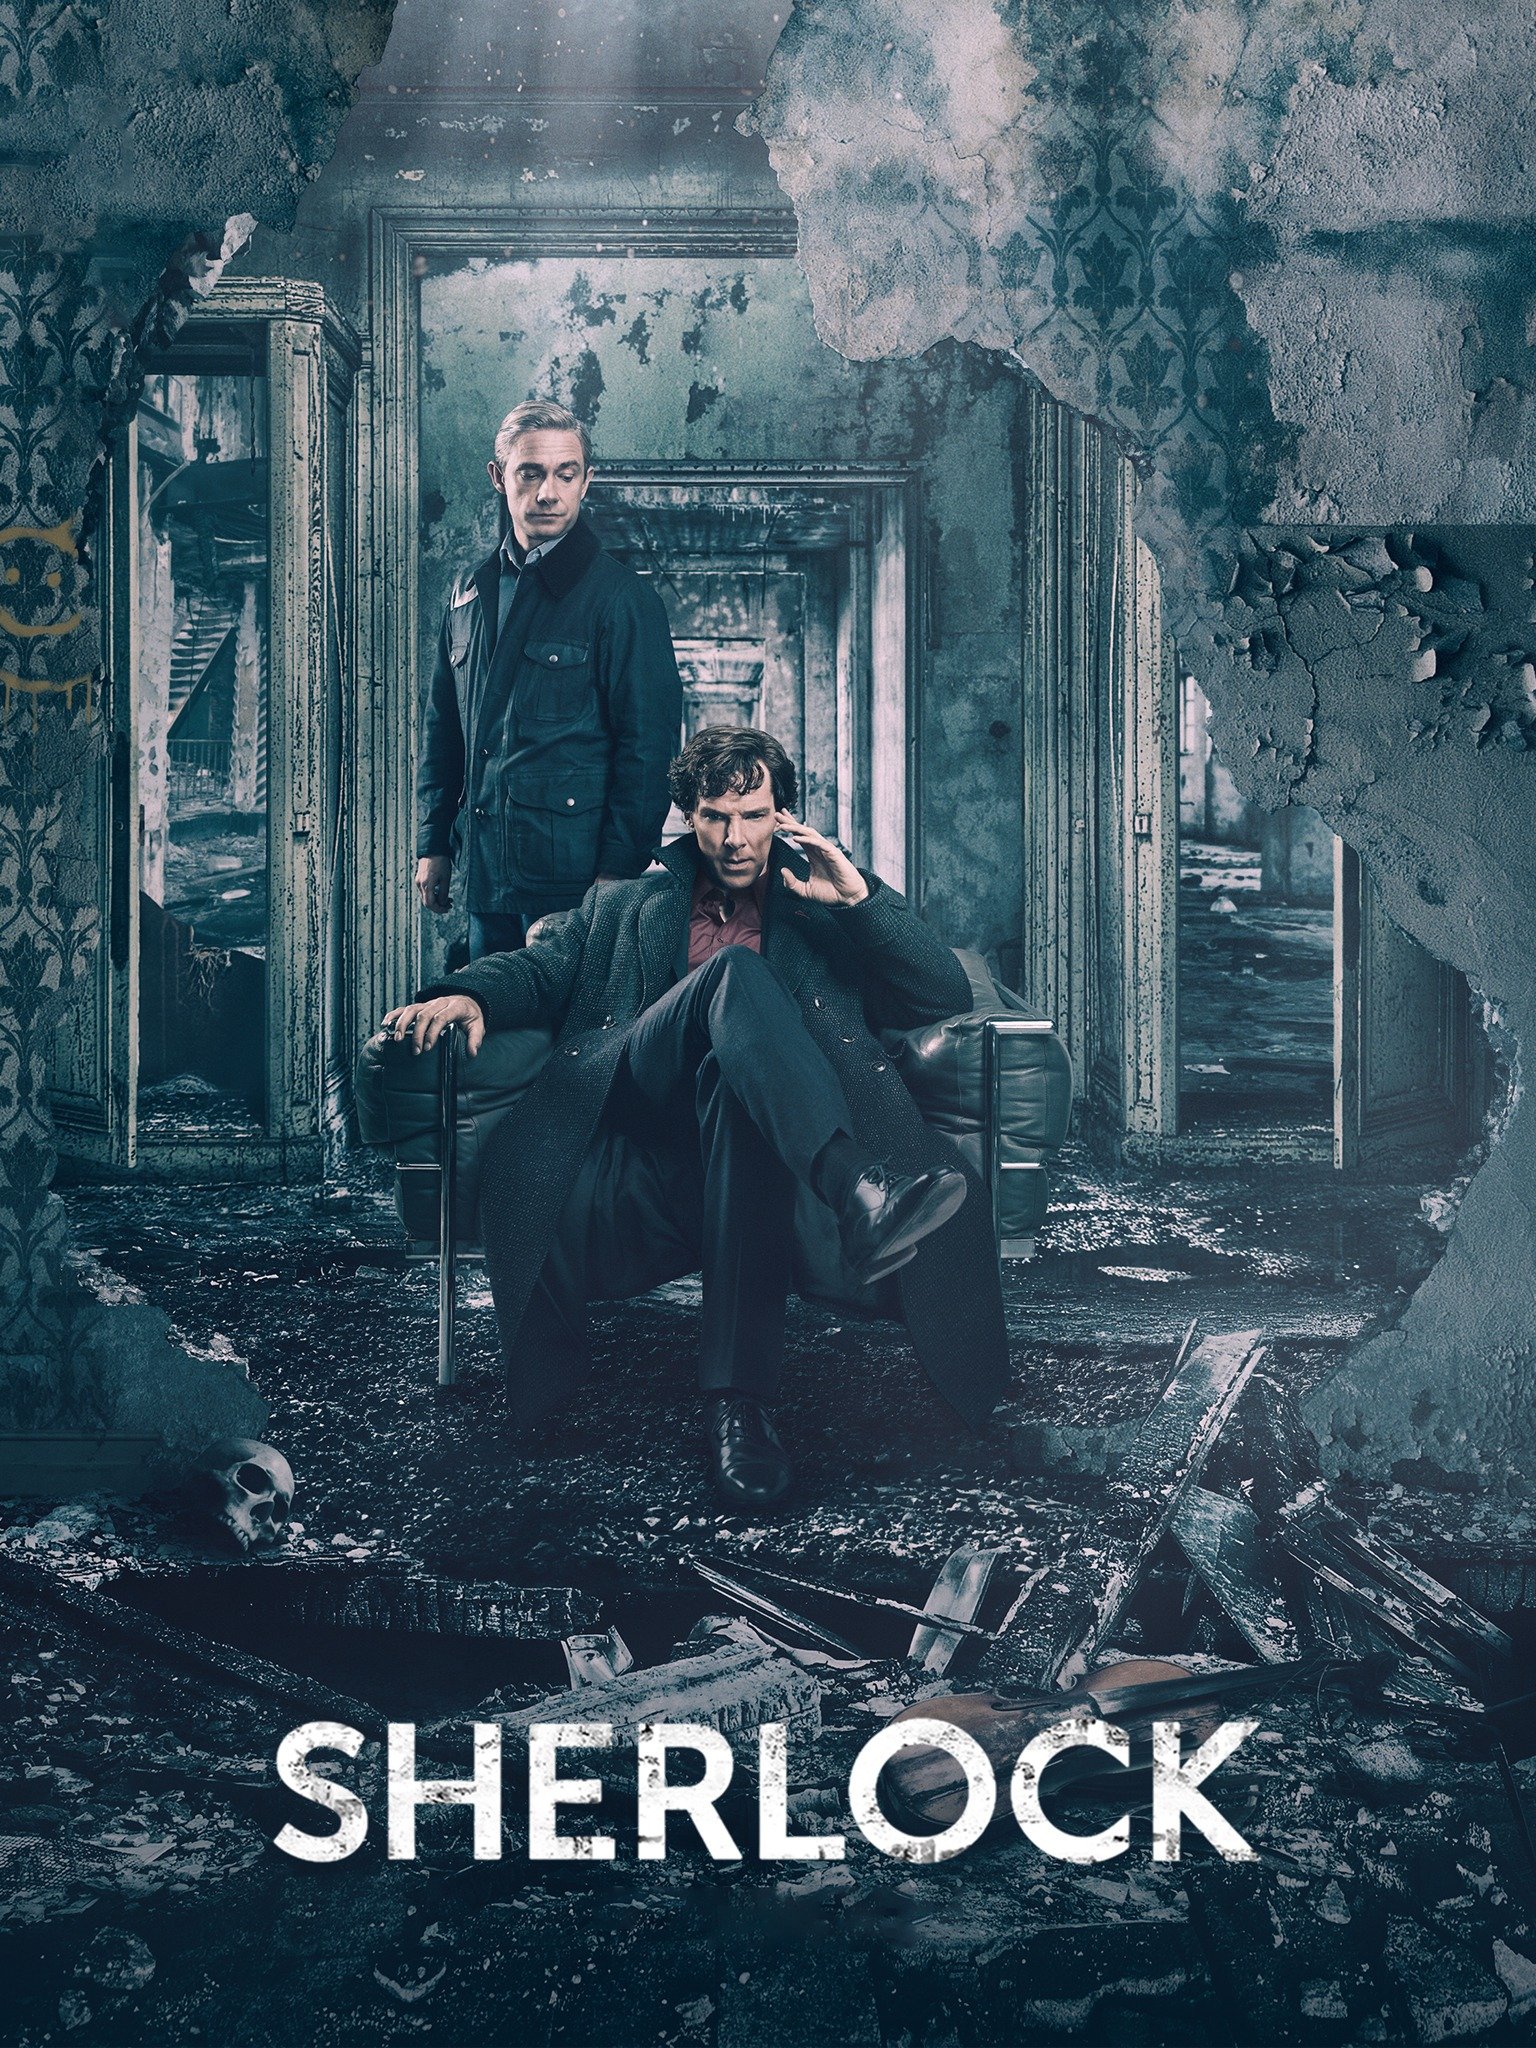 "Sherlock"